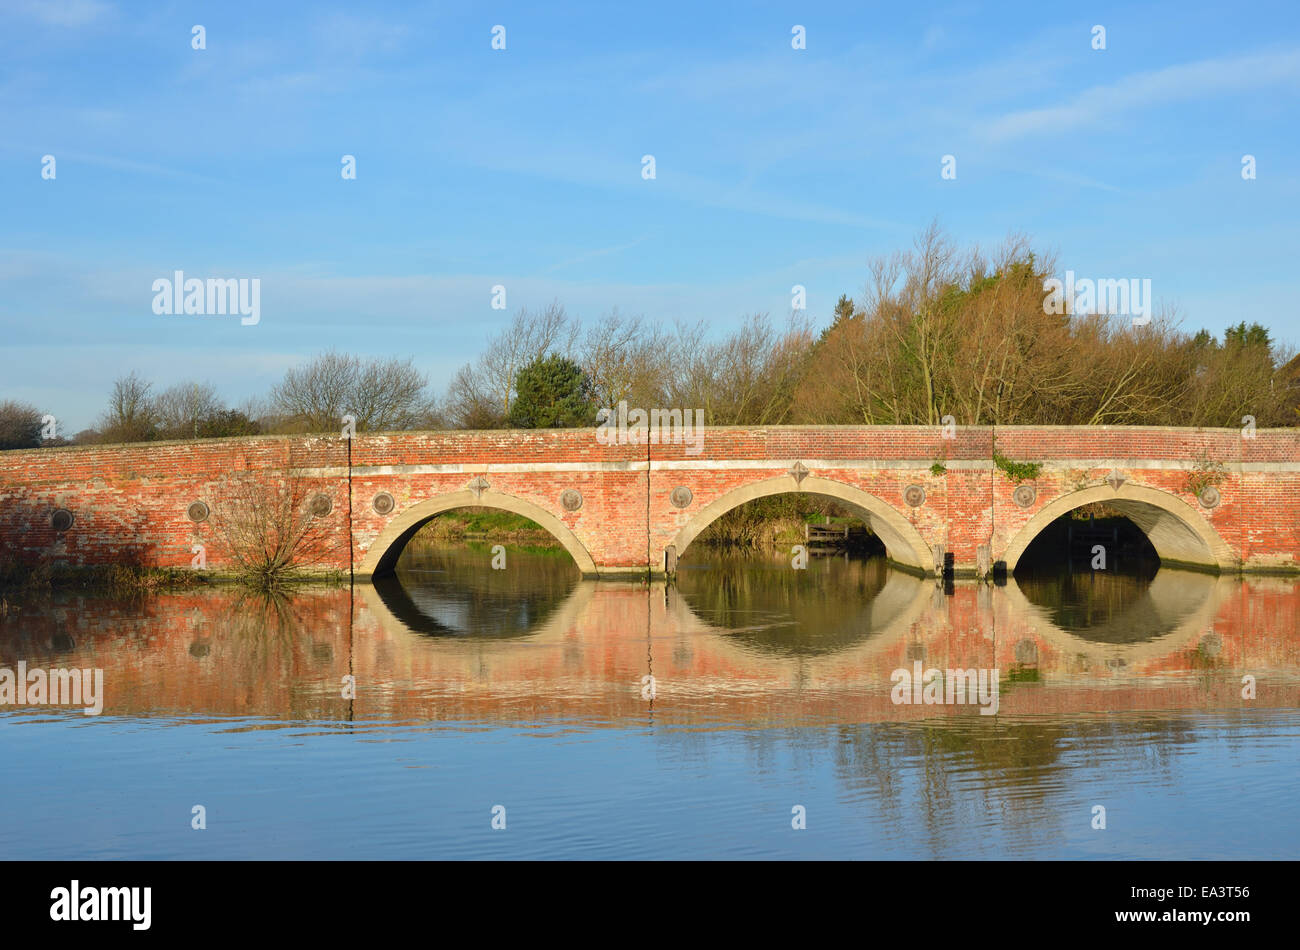 Large arched redbrick river bridge Stock Photo